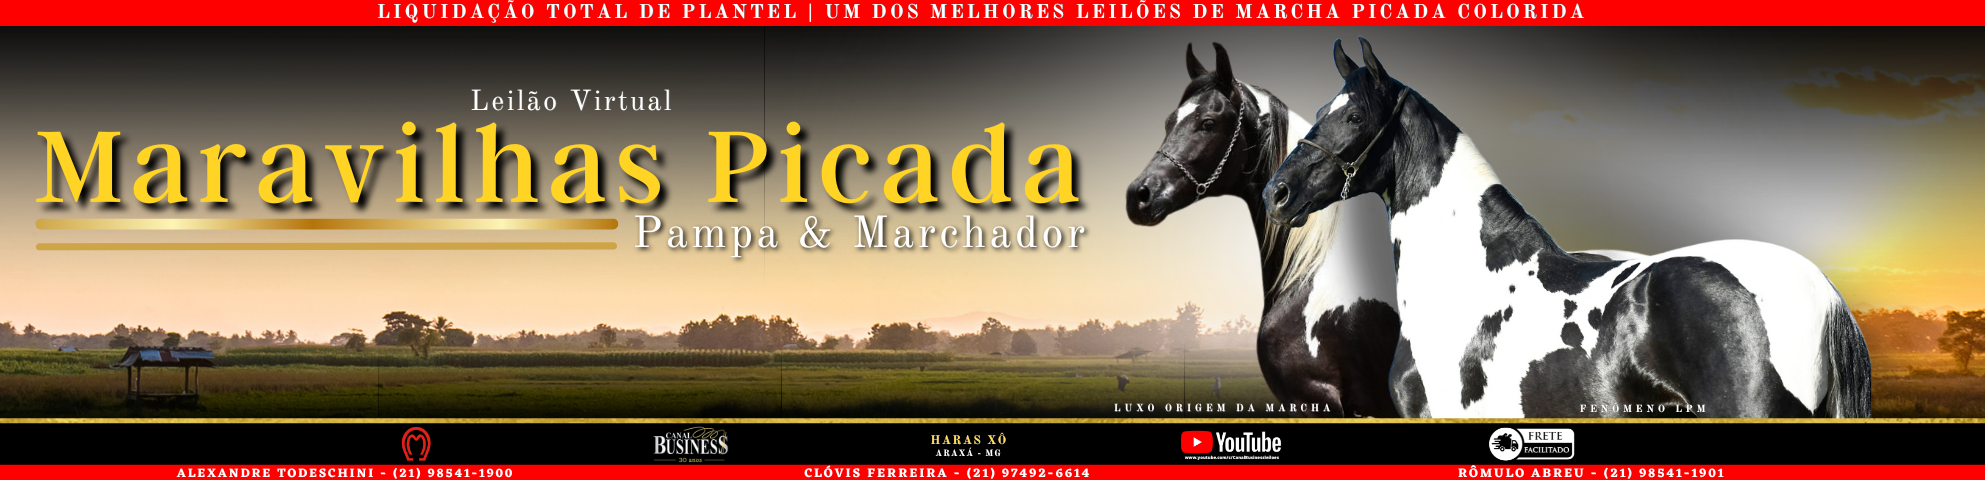 Slide MARAVILHAS PICADA - PAMPA & MARCHADOR